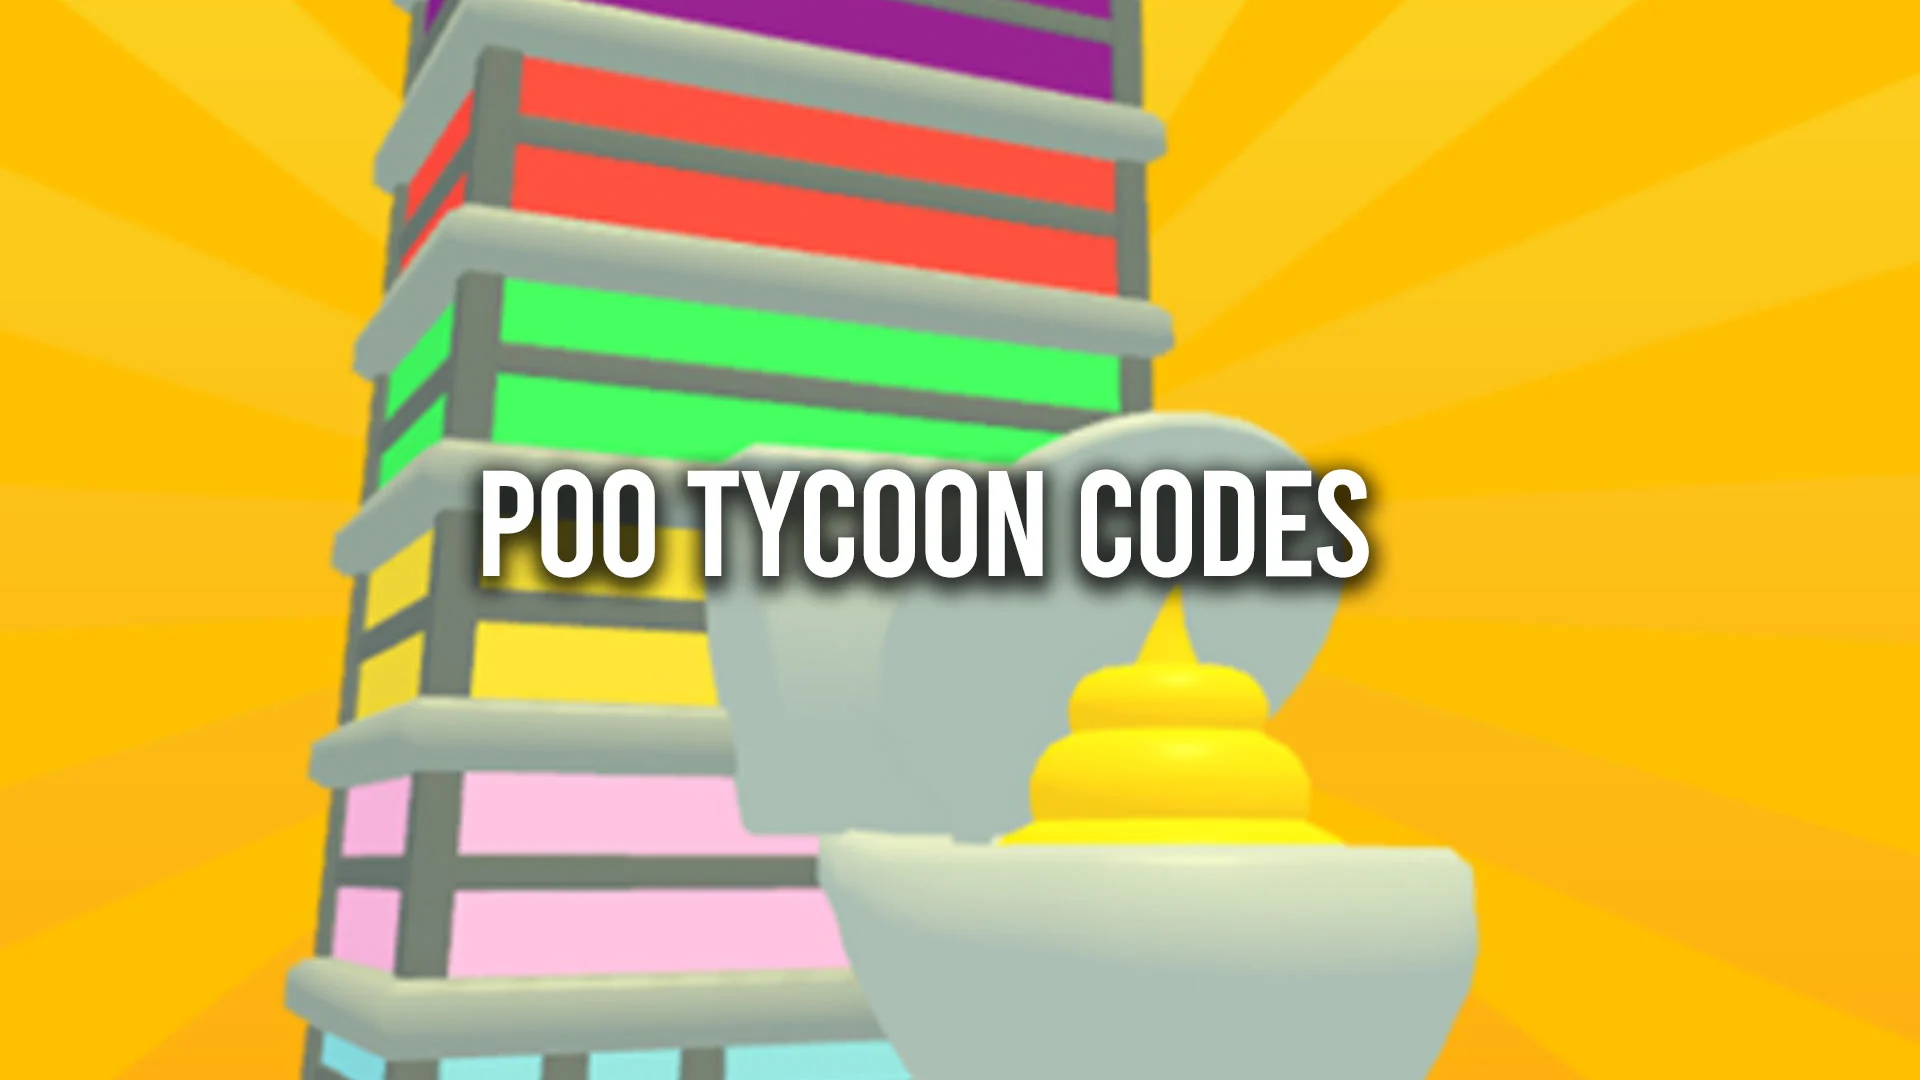 Poo Tycoon Codes